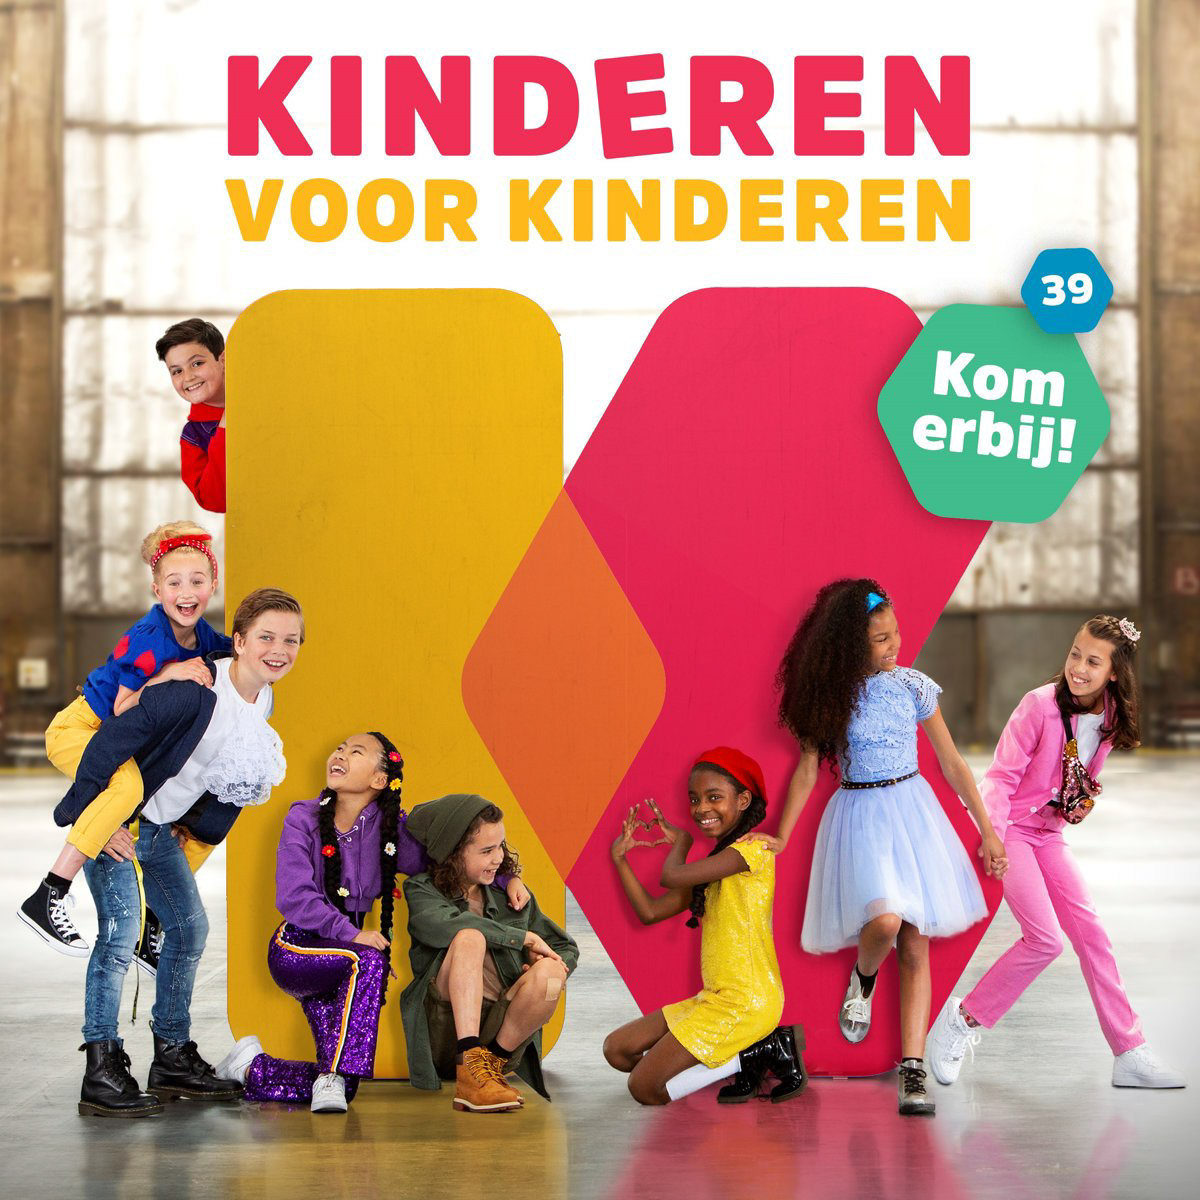 Kinderen voor kinderen VARA kinderkoor BNN BNN VARA Koningsspelen Pasapas Adobe Portfolio